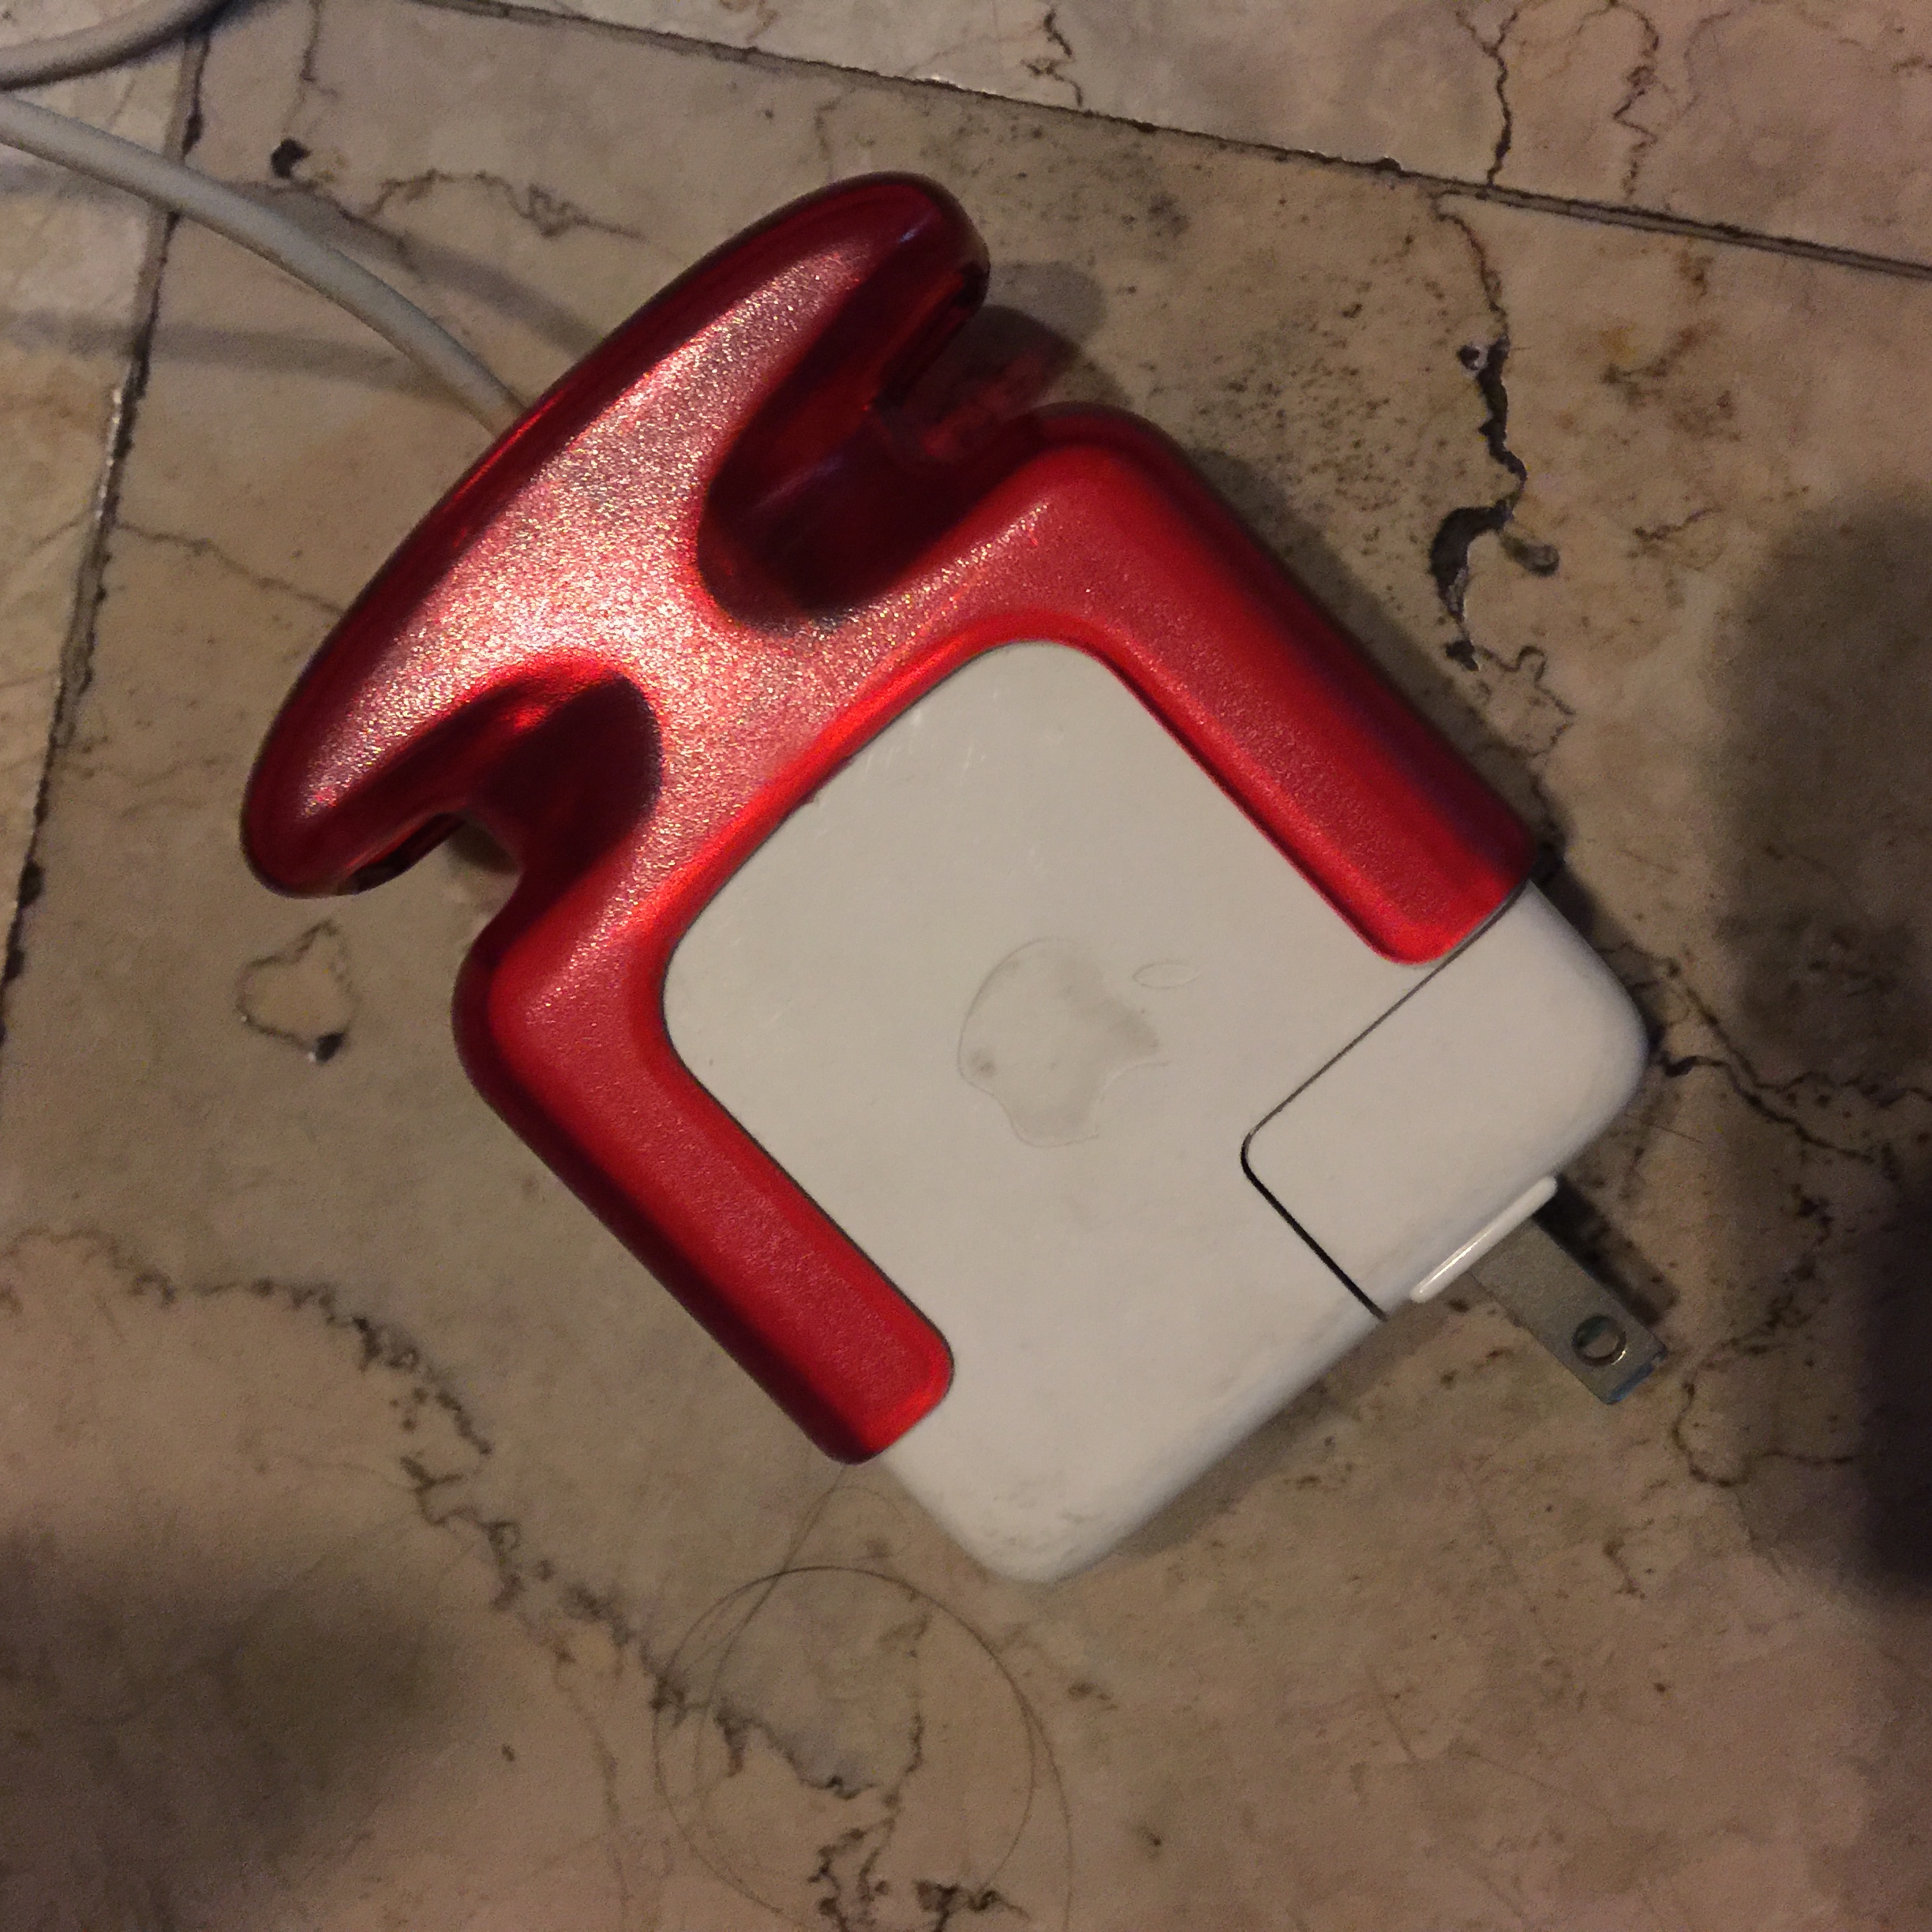 Juiceboxx charger case